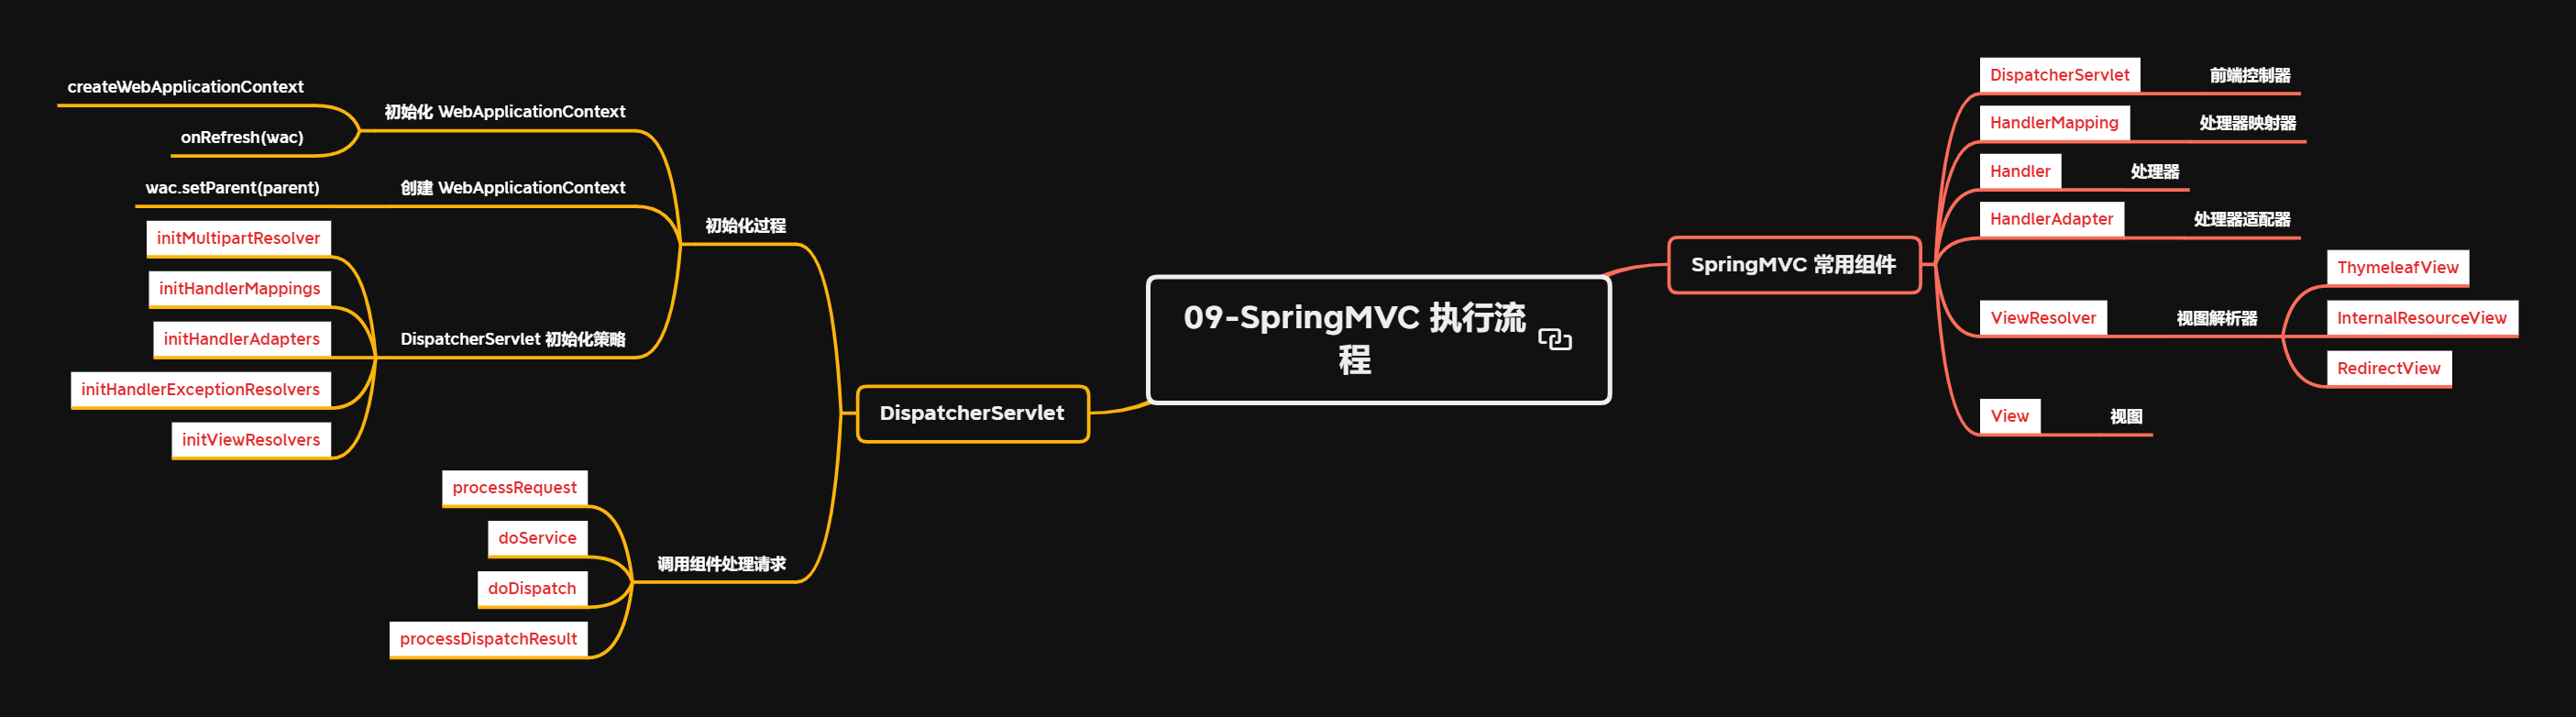 09-SpringMVC 执行流程